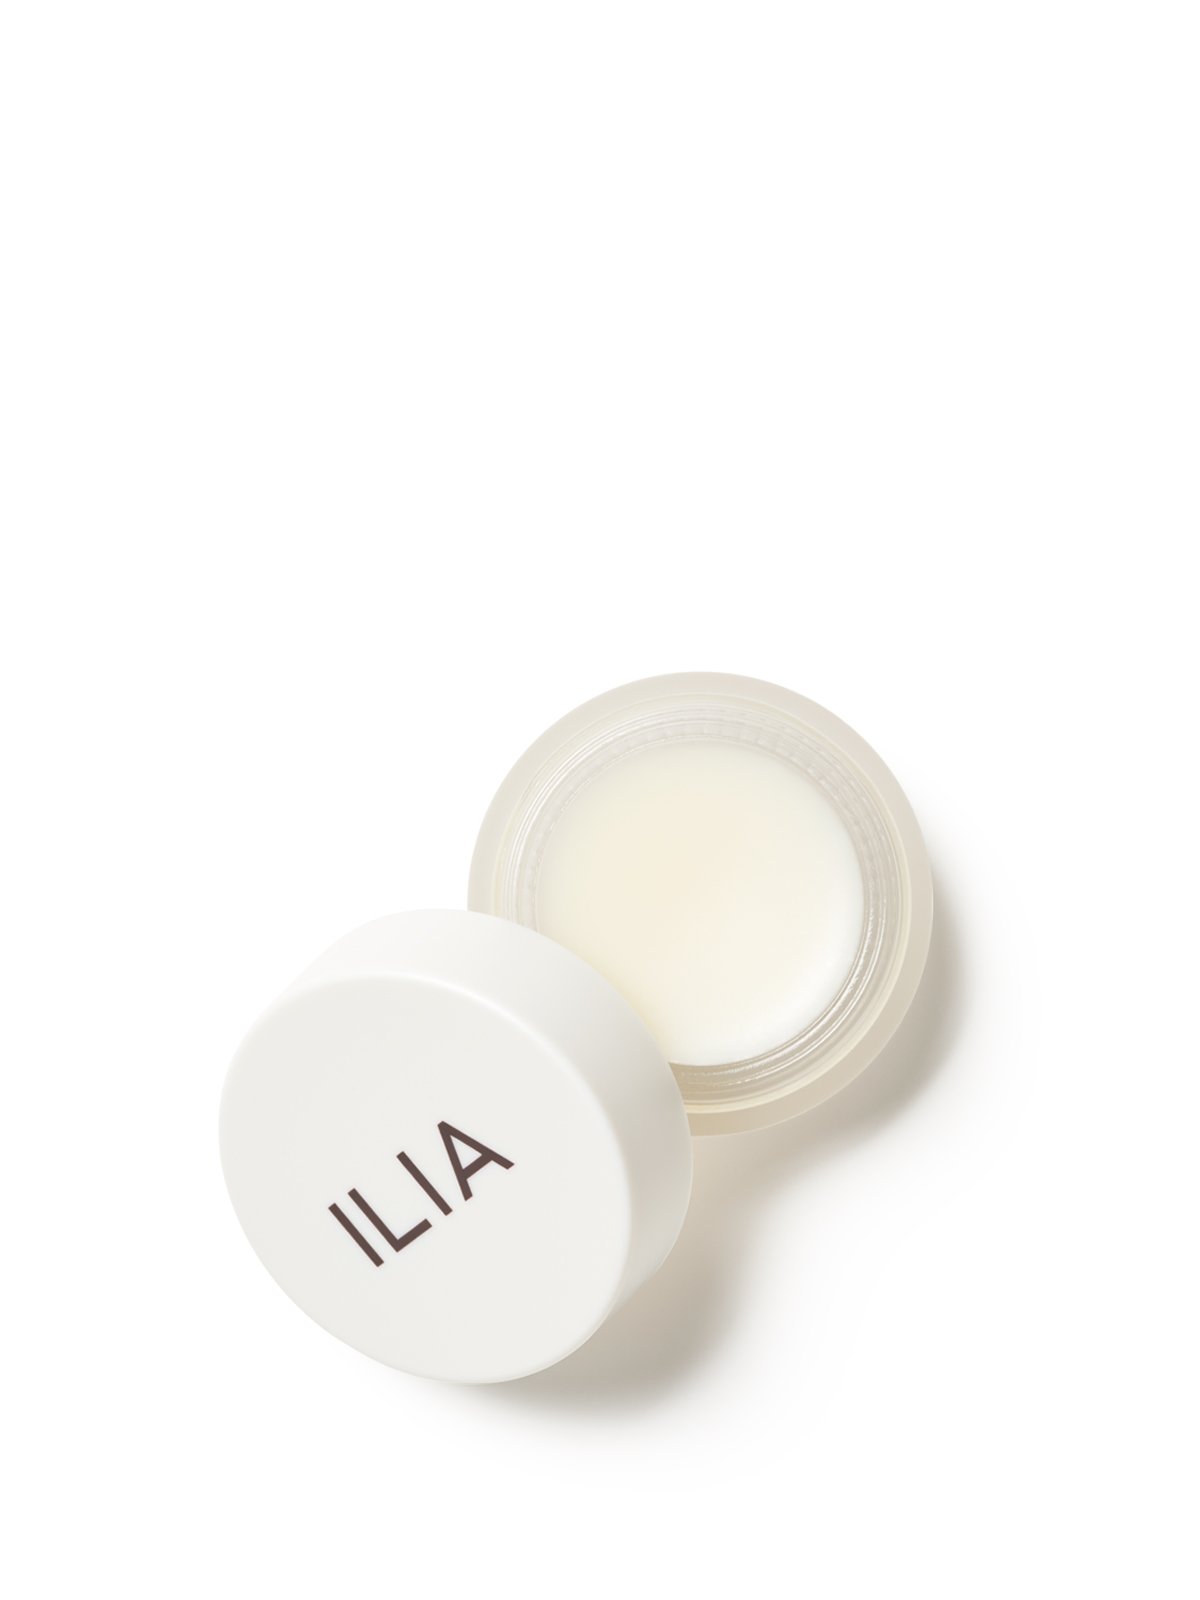 Jar of ILIA Lip Wrap Hydrating Mask - a deeply nourishing formula that hydrates and exfoliates lips.